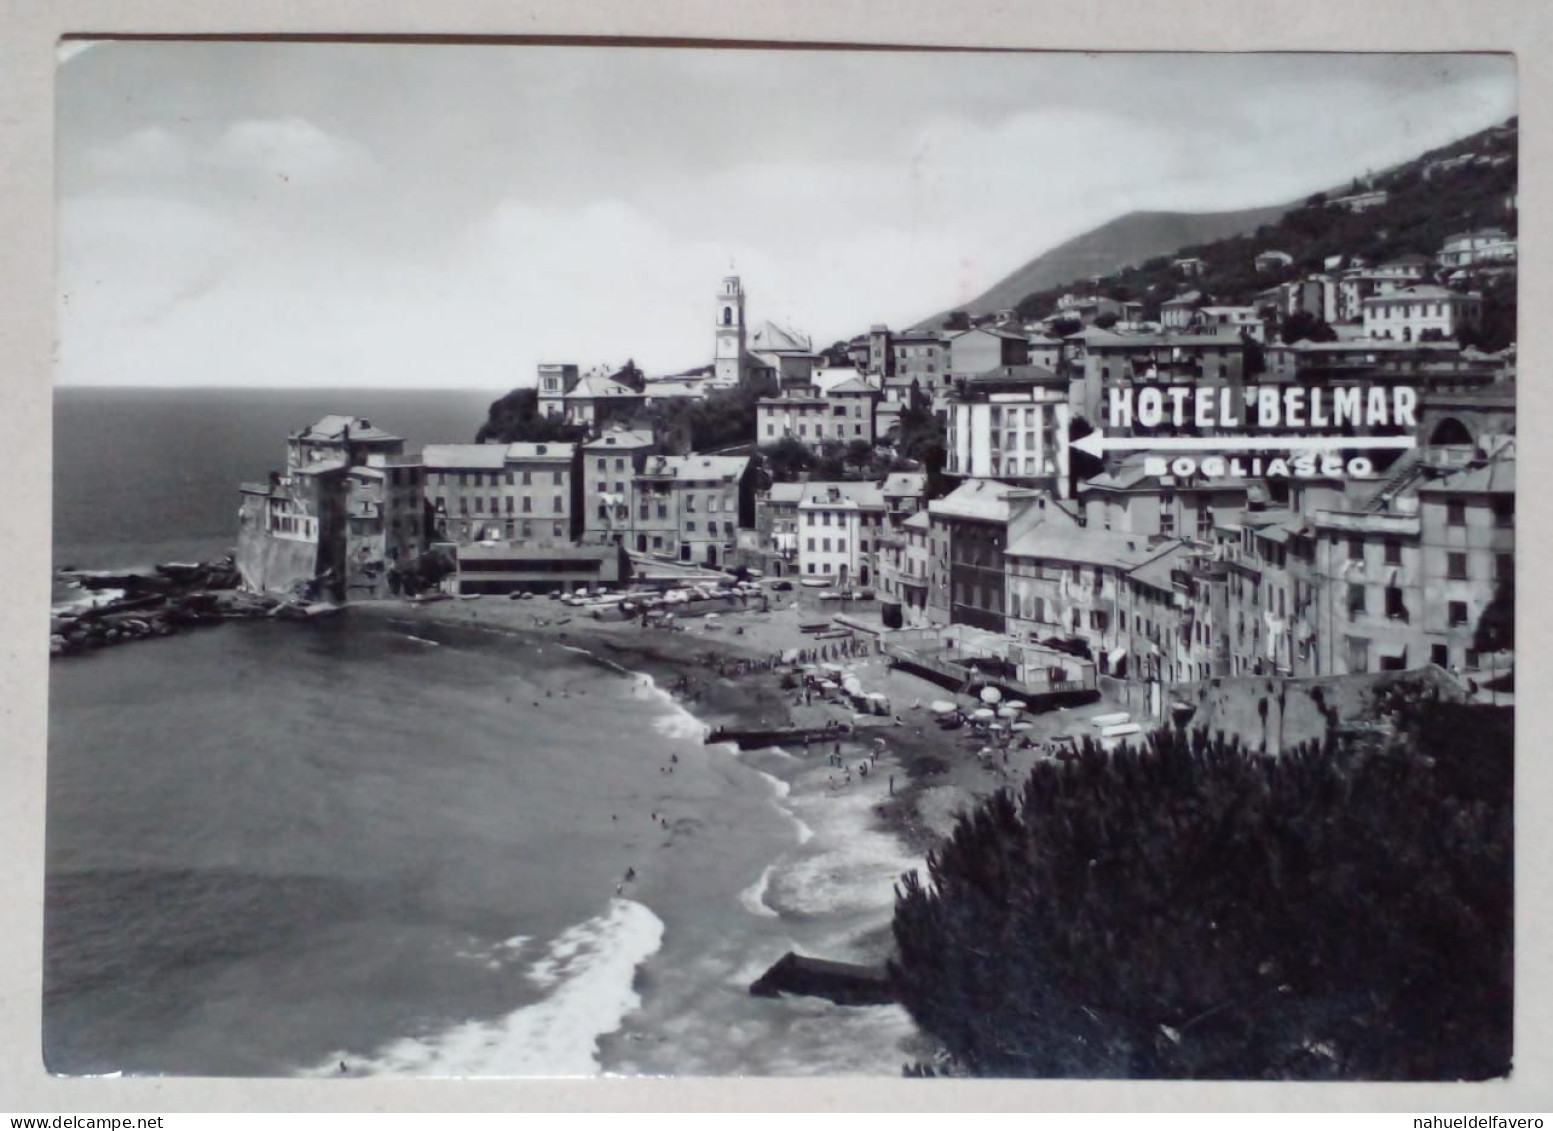 Carte Postale - Hôtel Belmar, Gênes, Italie. - Hoteles & Restaurantes